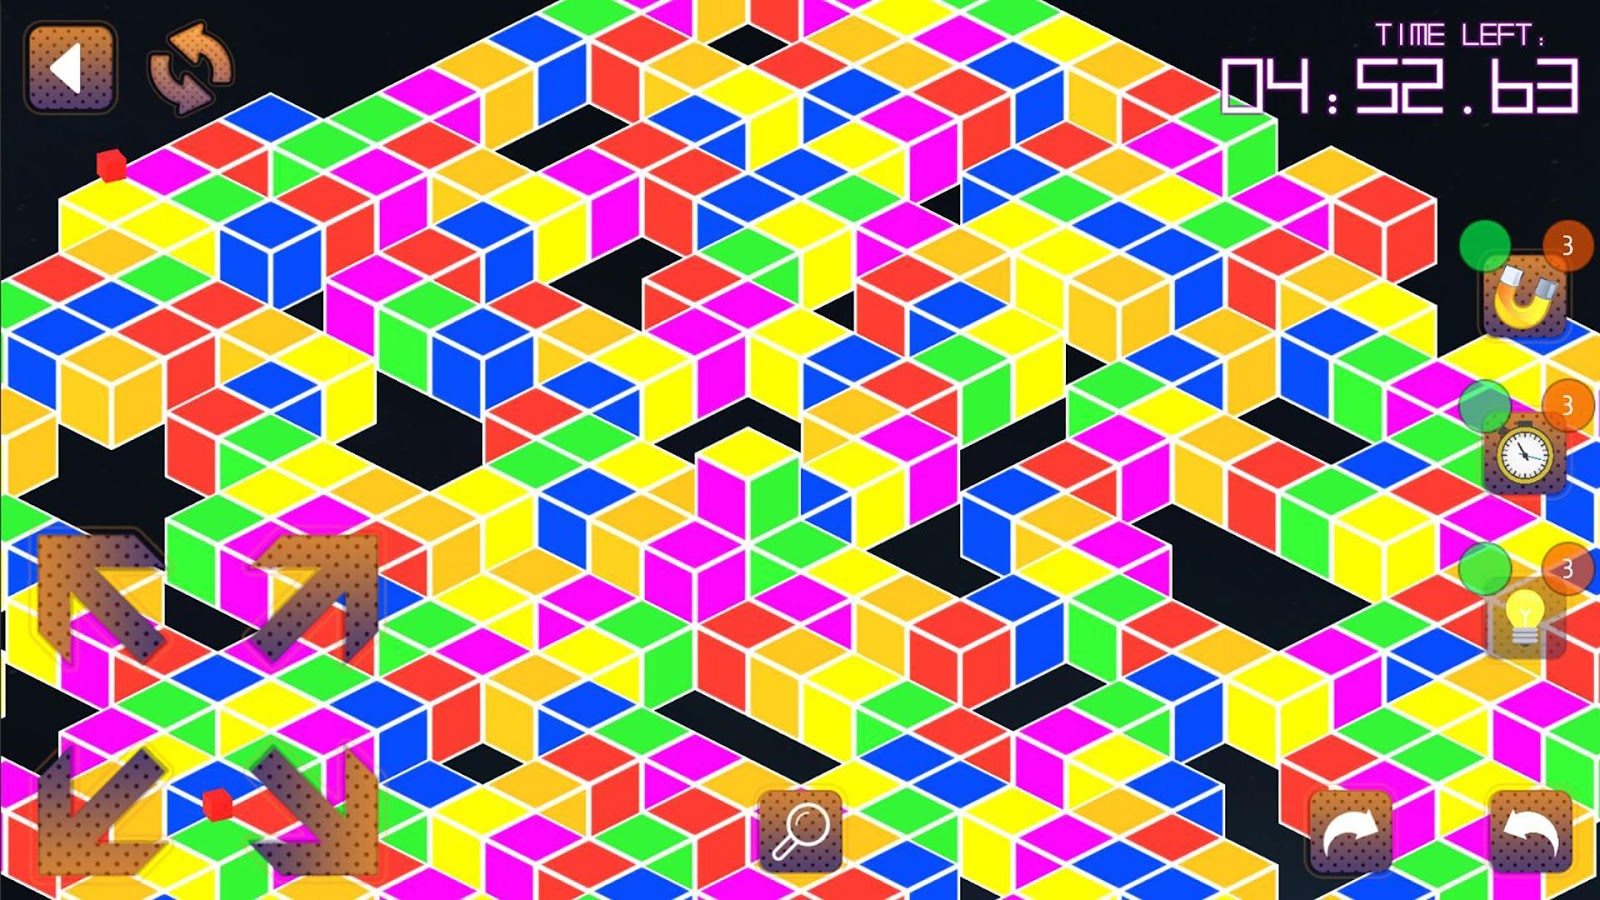 Игра кубик андроид. 3d Maze игра. Игры с кубиками на андроид. Андроид игра кубик а лабиринте. Игра на ПК про разноцветные кубики.